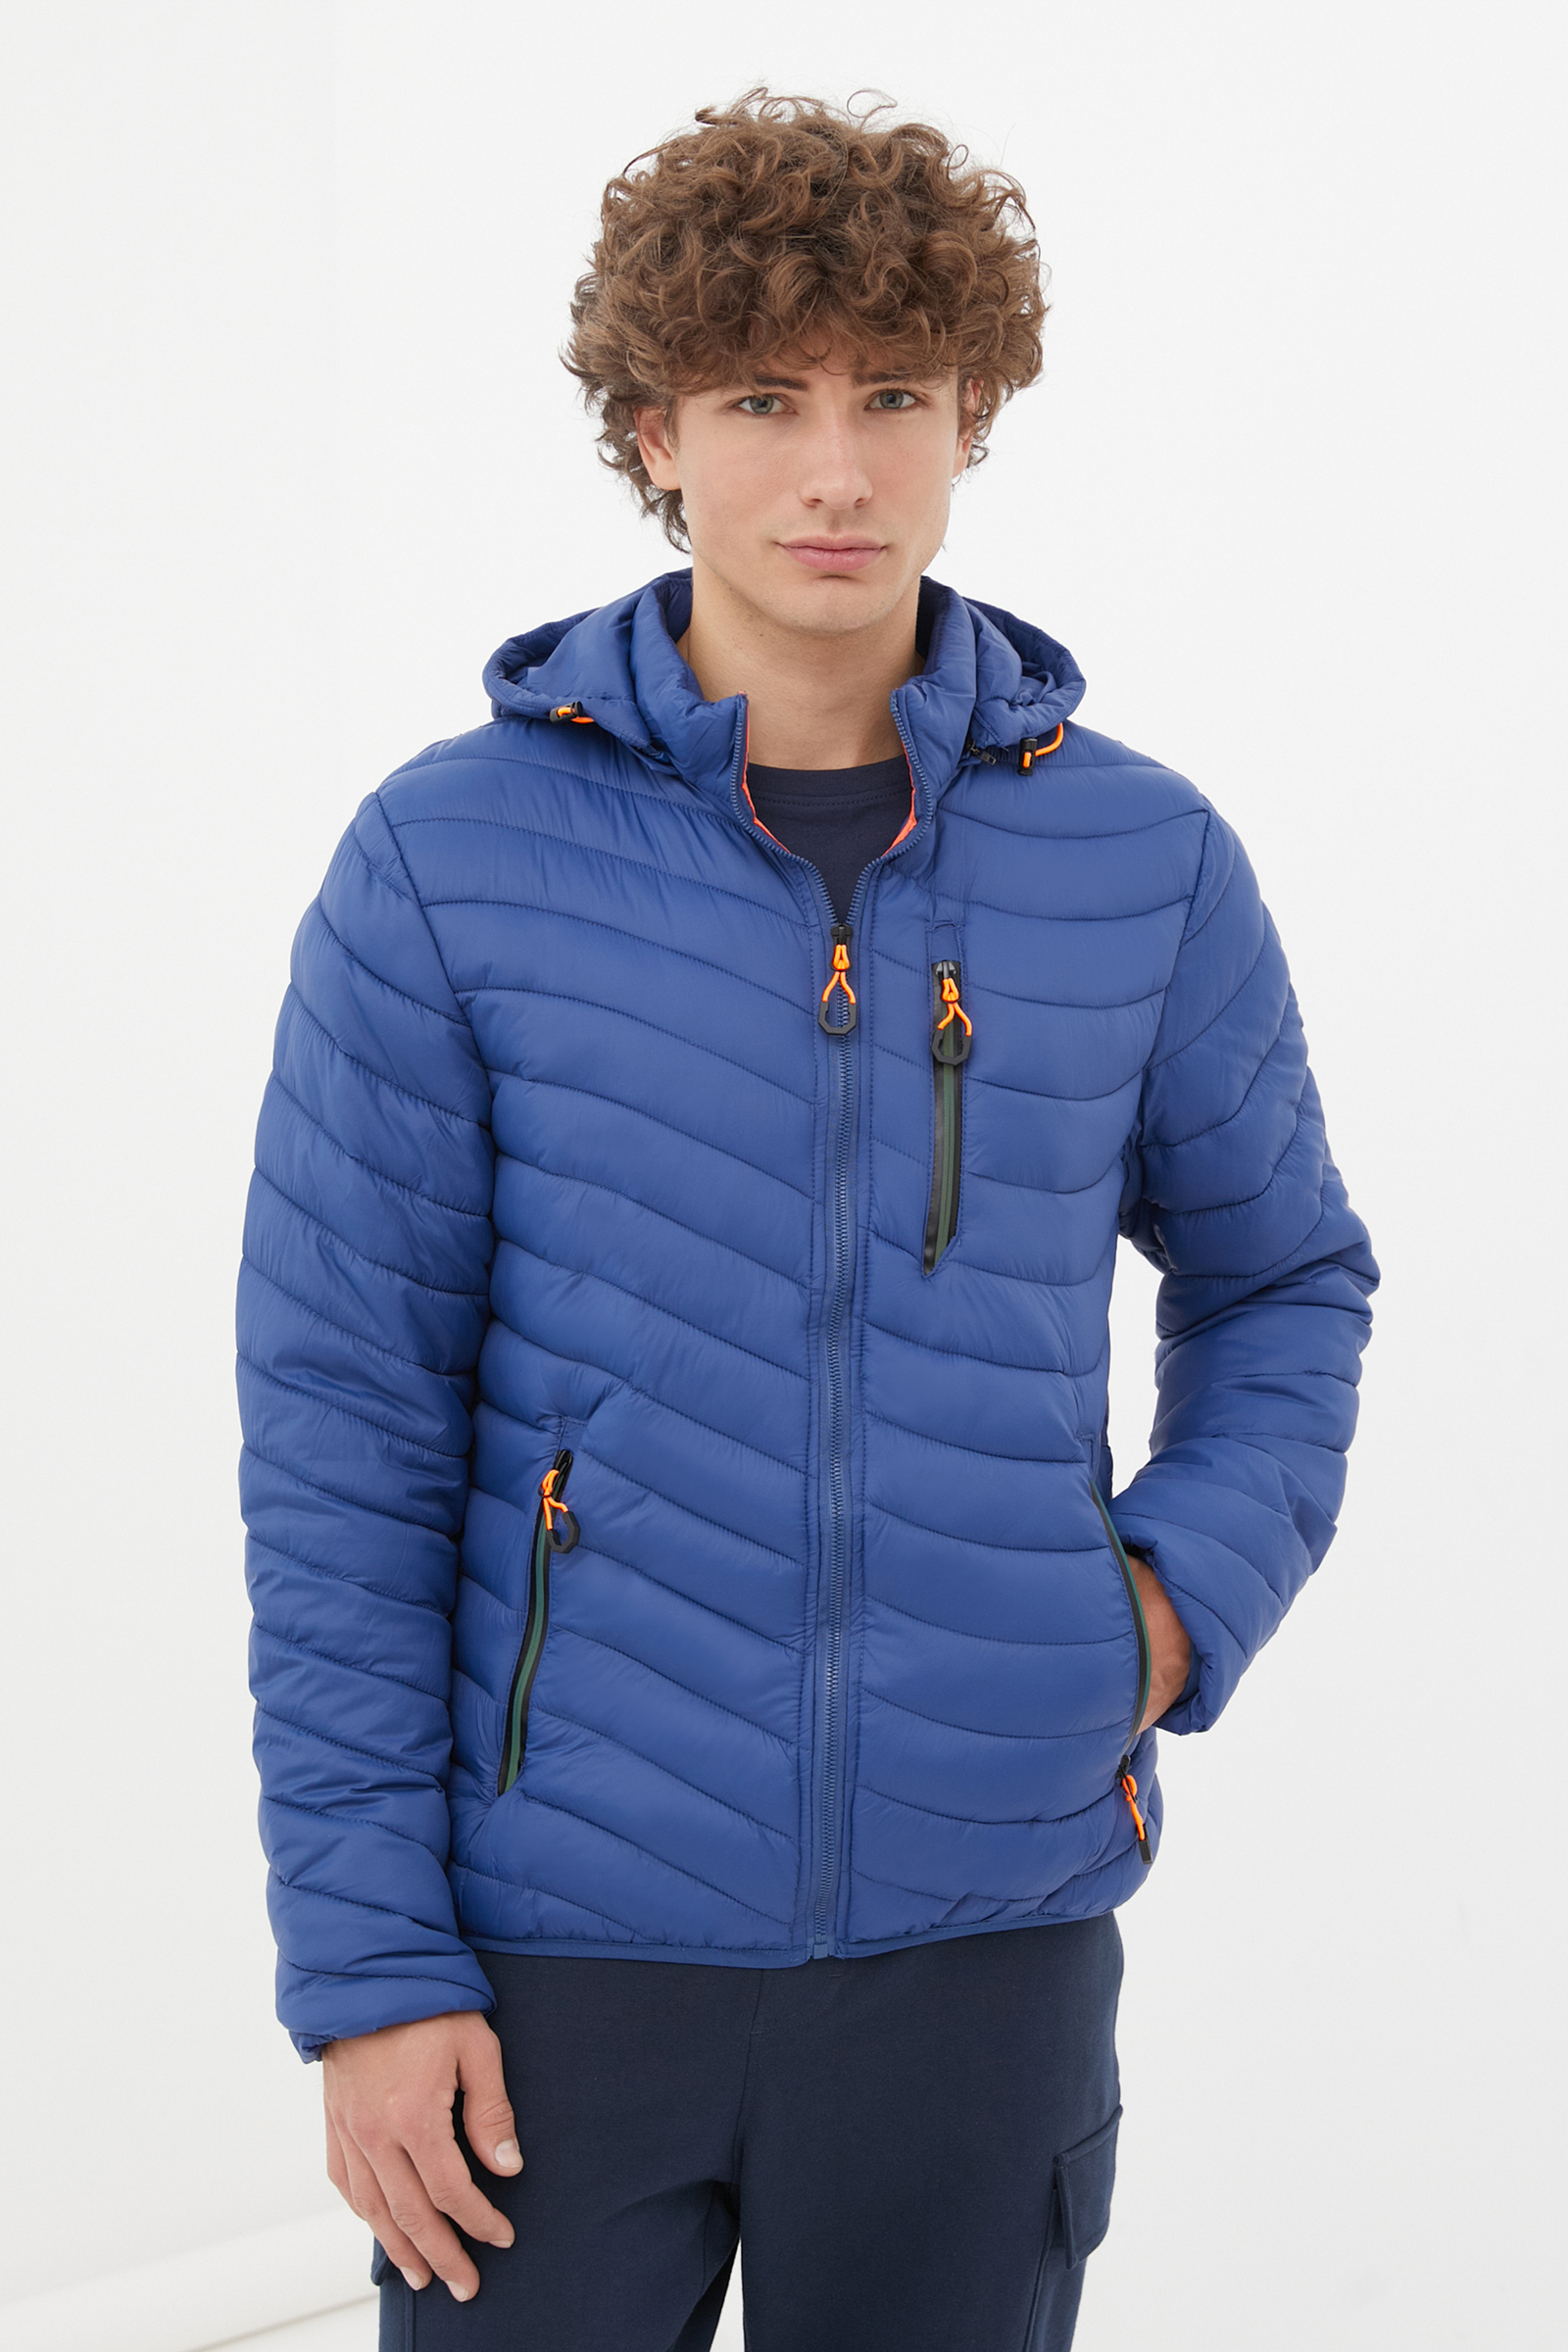 Куртка мужская Finn Flare FBC21063C синяя 3XL